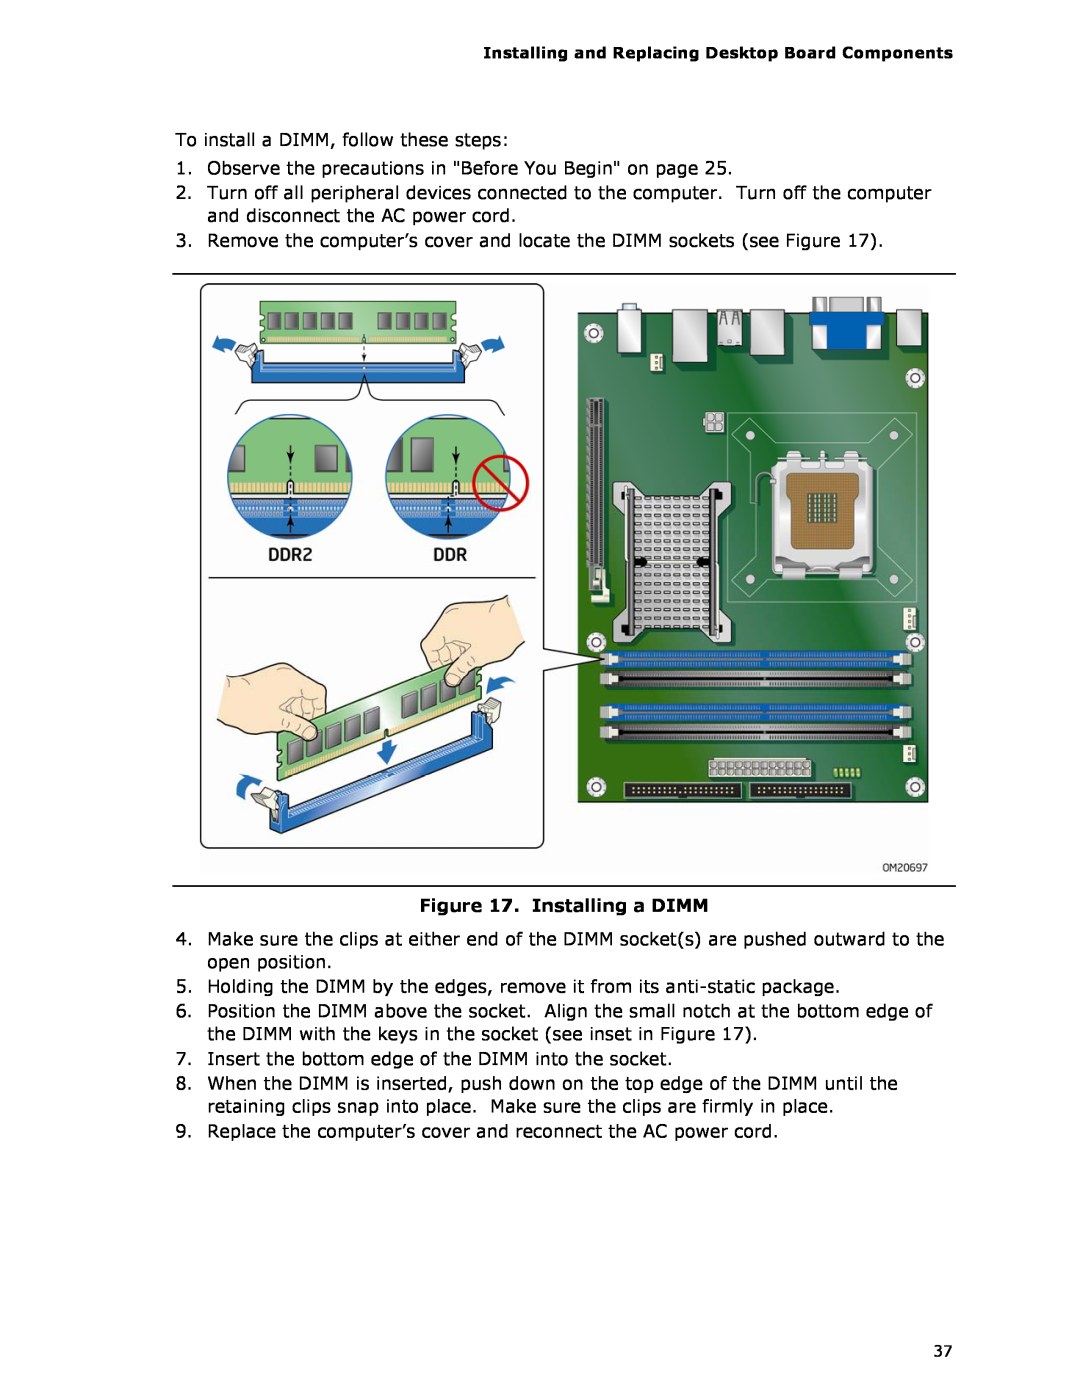 Intel DG35EC, Intel Desktop Board manual Installing a DIMM 